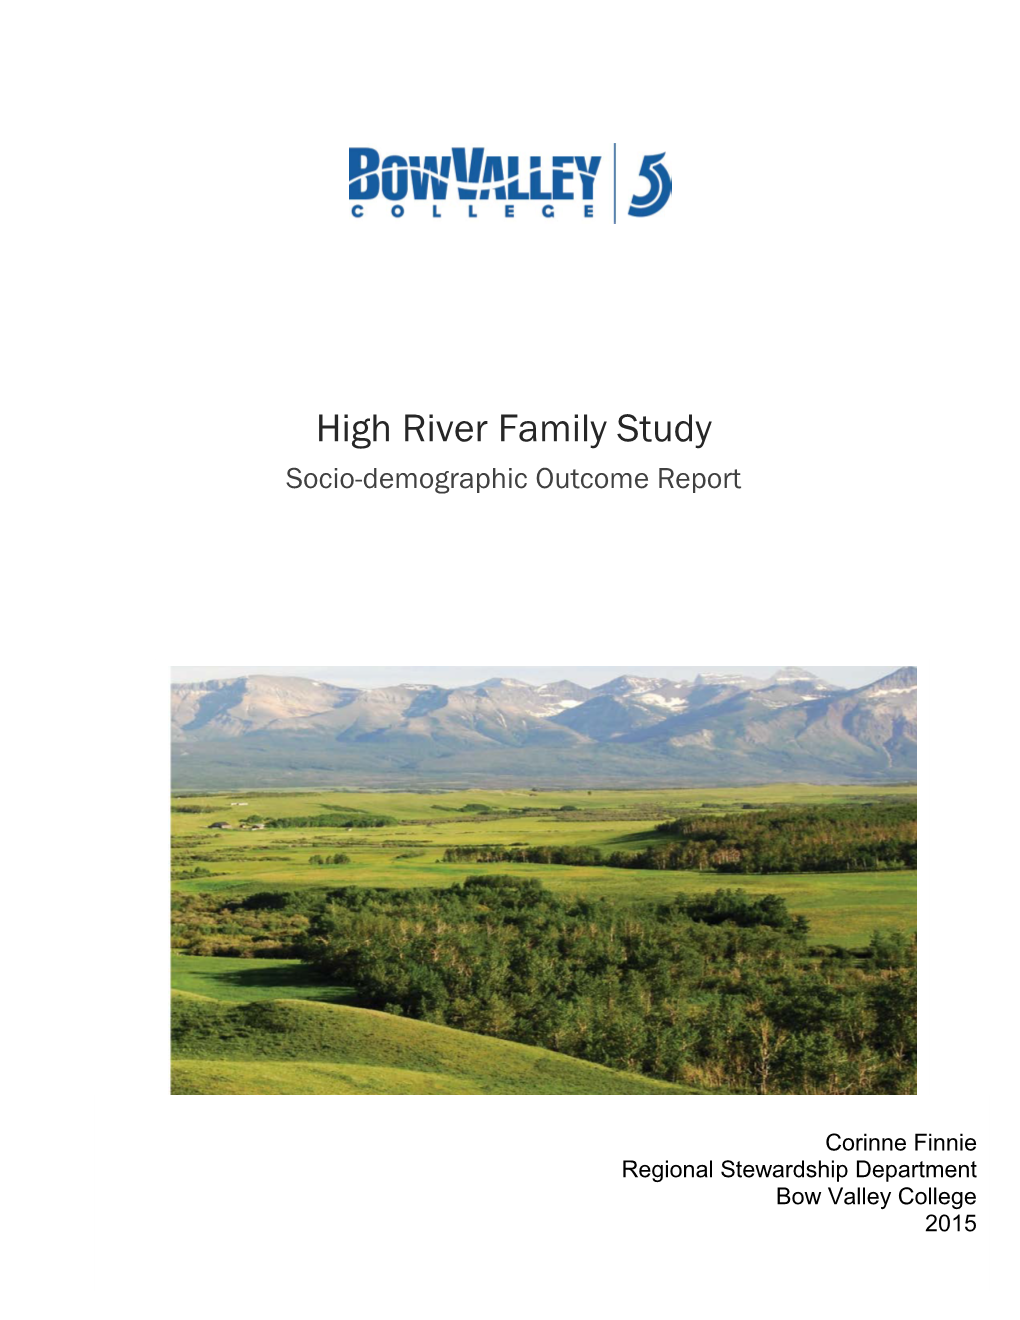 High River Family Study Socio-Demographic Outcome Report